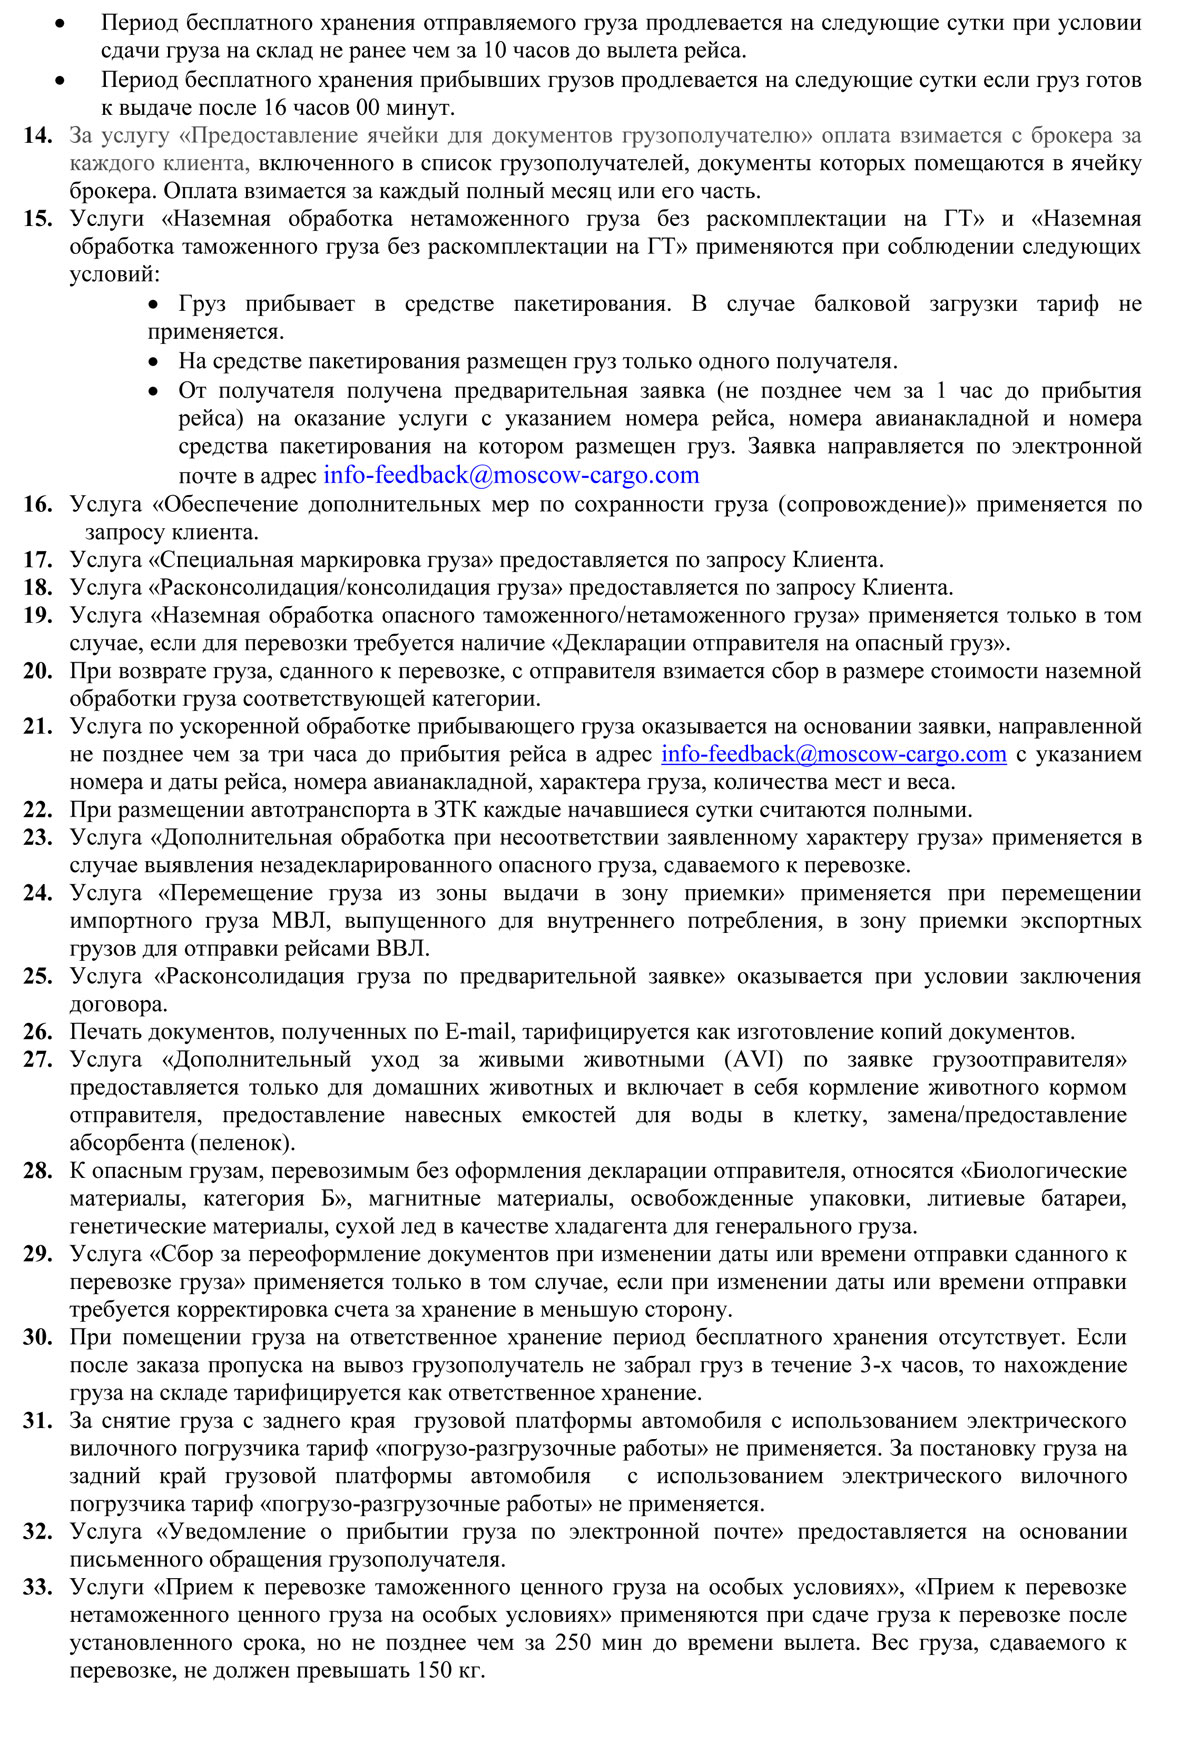 Тарифы на обслуживание грузов Москва Карго ВВЛ/МВЛ